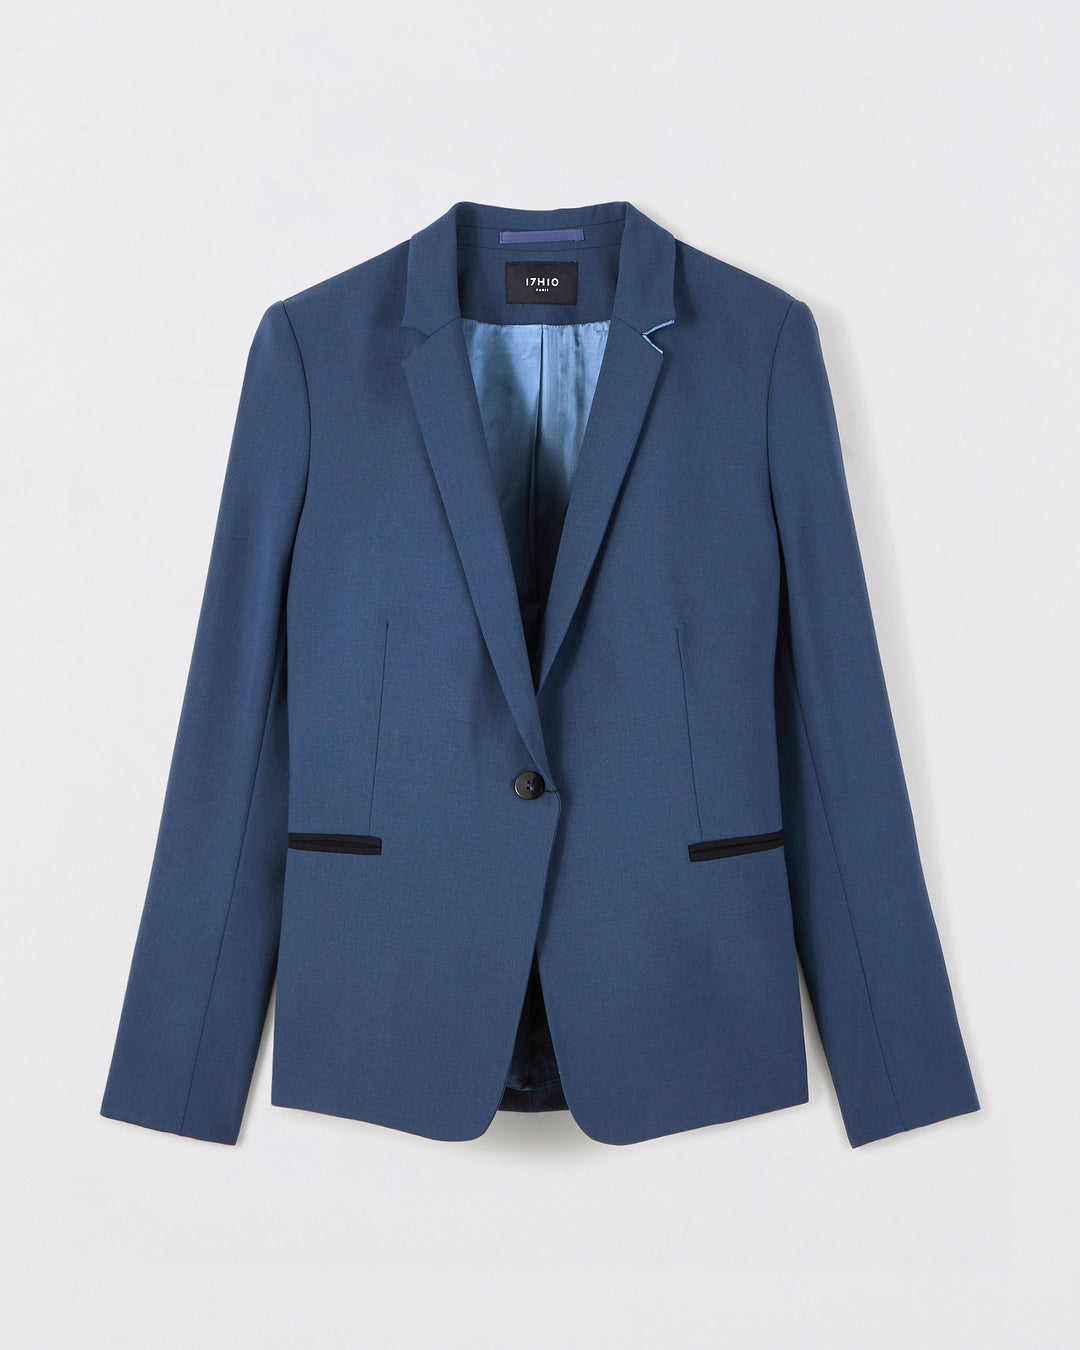 Tailor-jacket-blazer-blue-grey-Cut-cut-collar-tailor-Length-below-bottom-Two-pockets-pass-punched-Two-pockets-inside-Two-pockets-fully-lined-Button-down-sleeves-Buttons-black-17H10-tailors-for-women-paris-